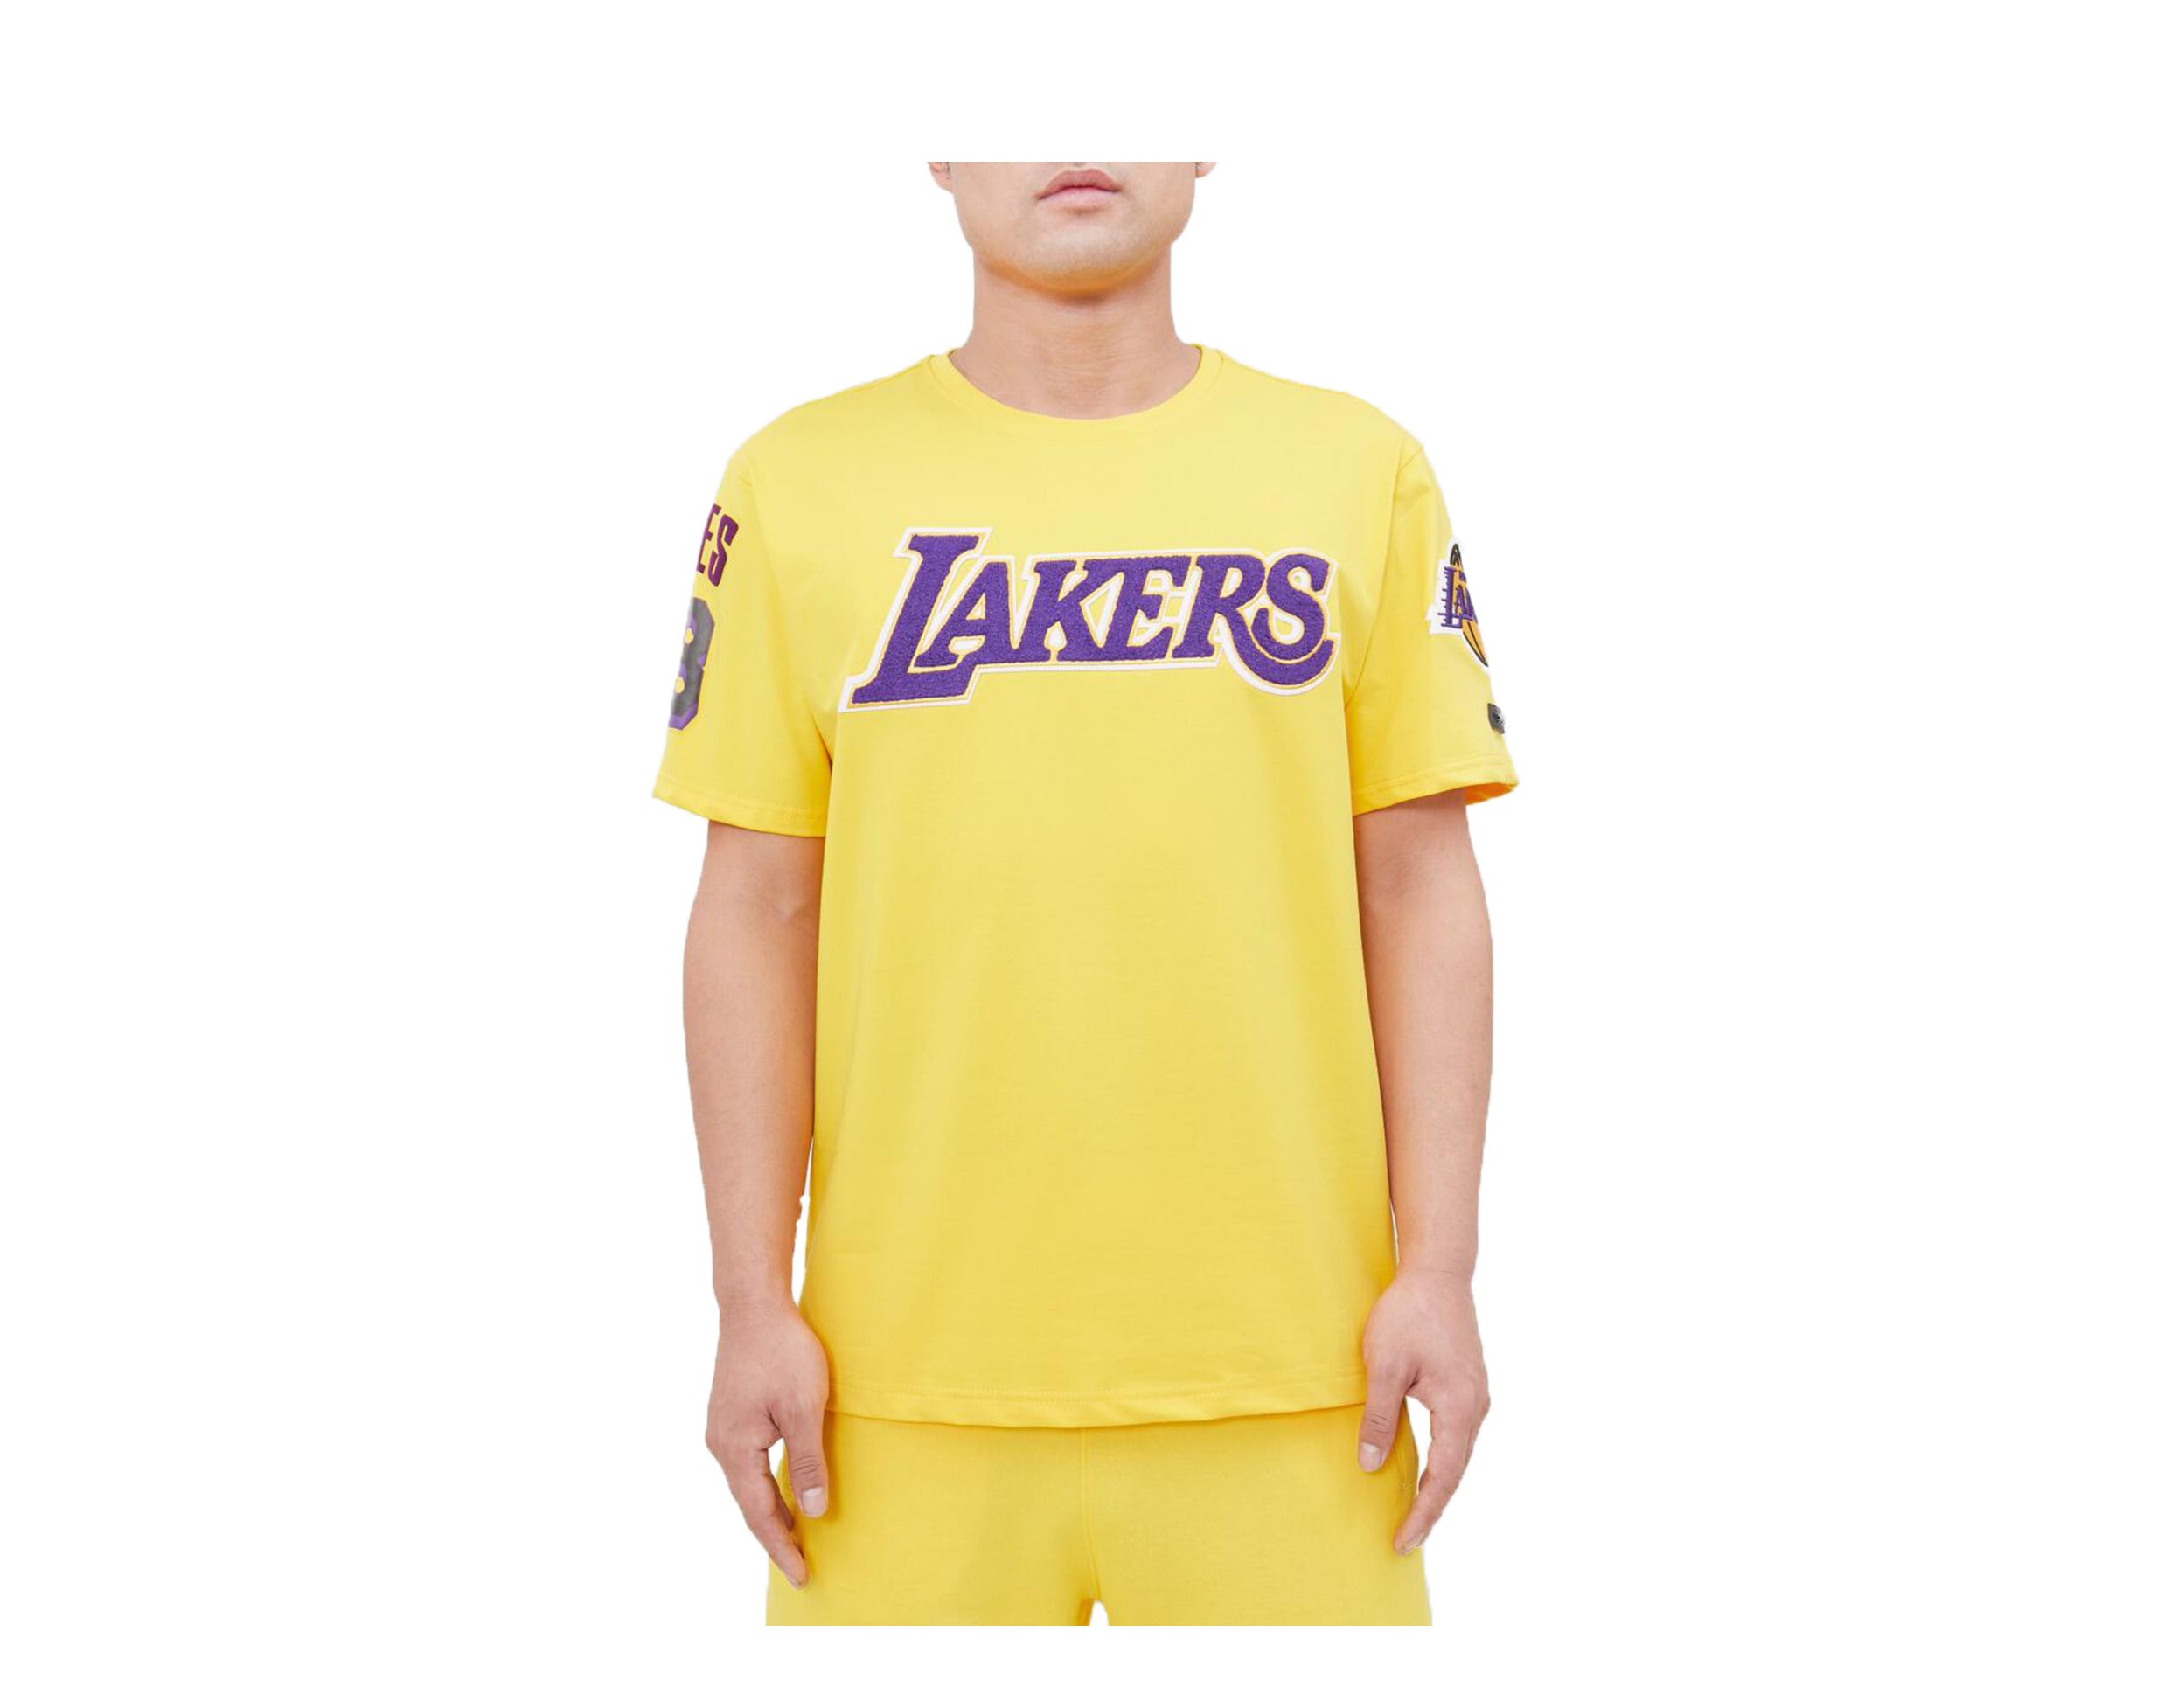 Pro Standard NBA Los Angeles Lakers - LeBron James Pro Team Men's Shirt S